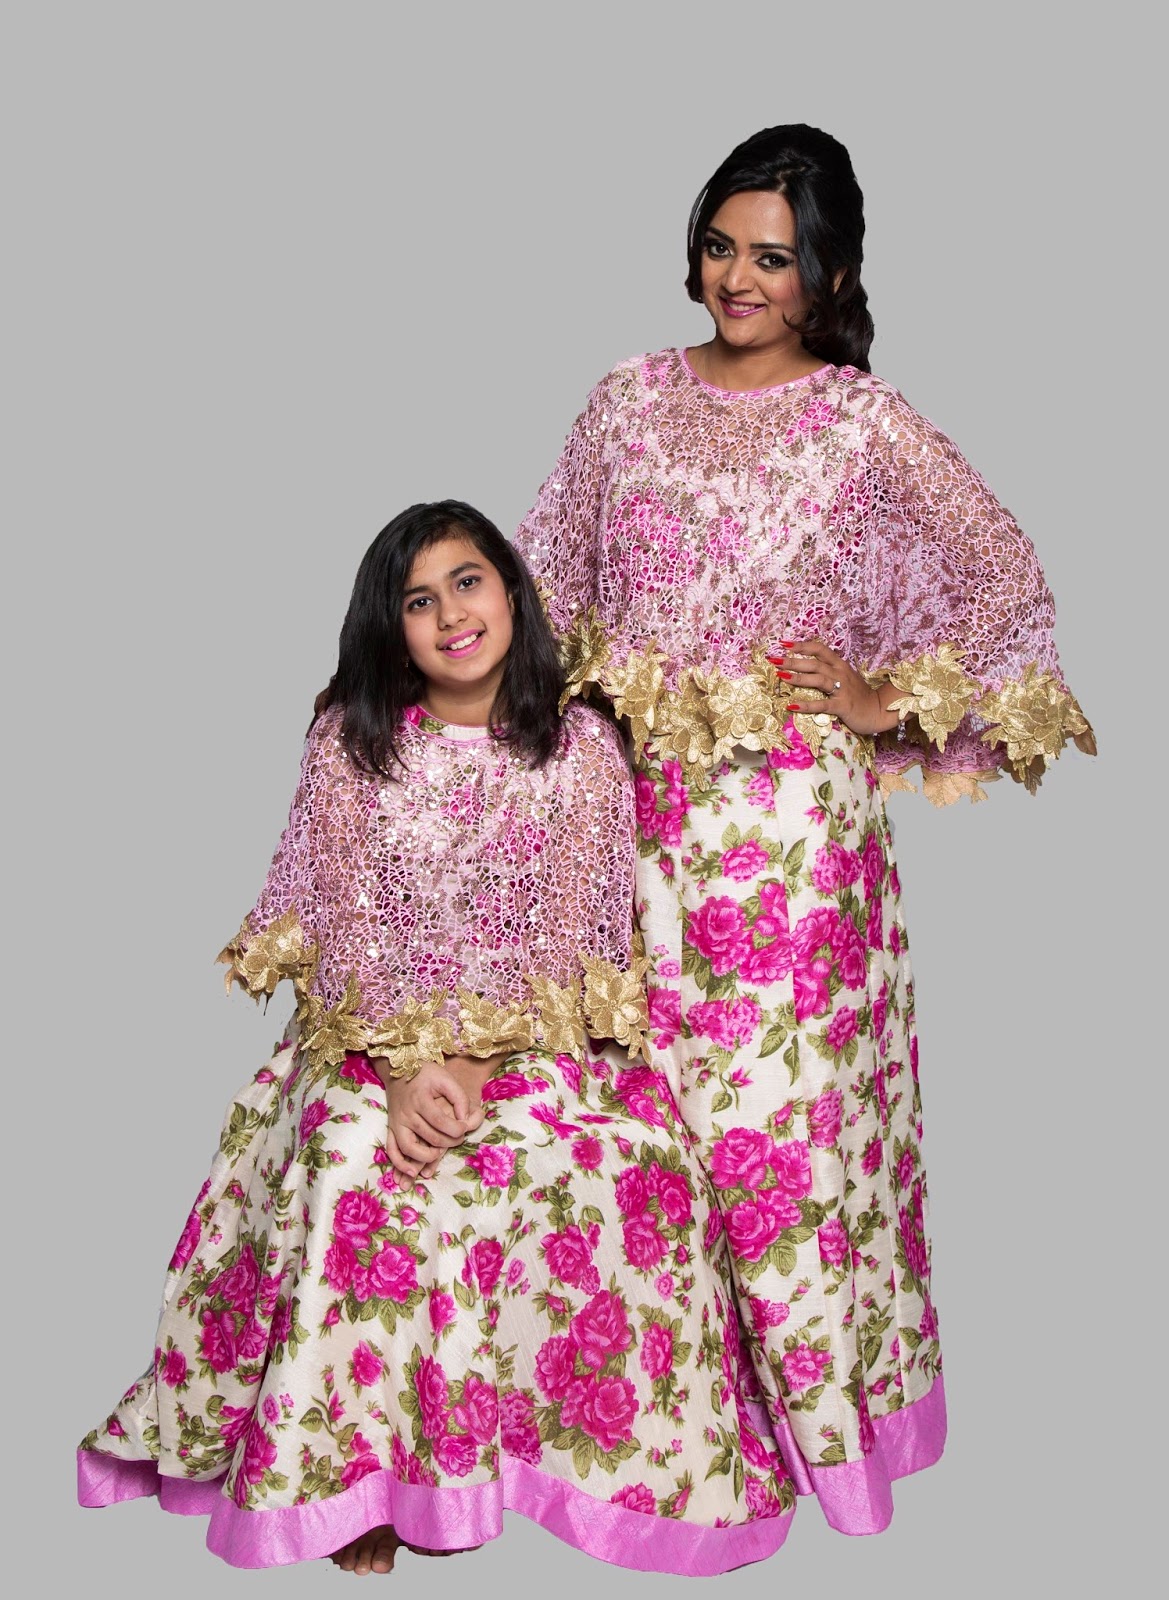 Floral Maxi Dress for Spring , floral dresses, similar dresses for sisters, two girls wearing same dresses, 2016 floral trend